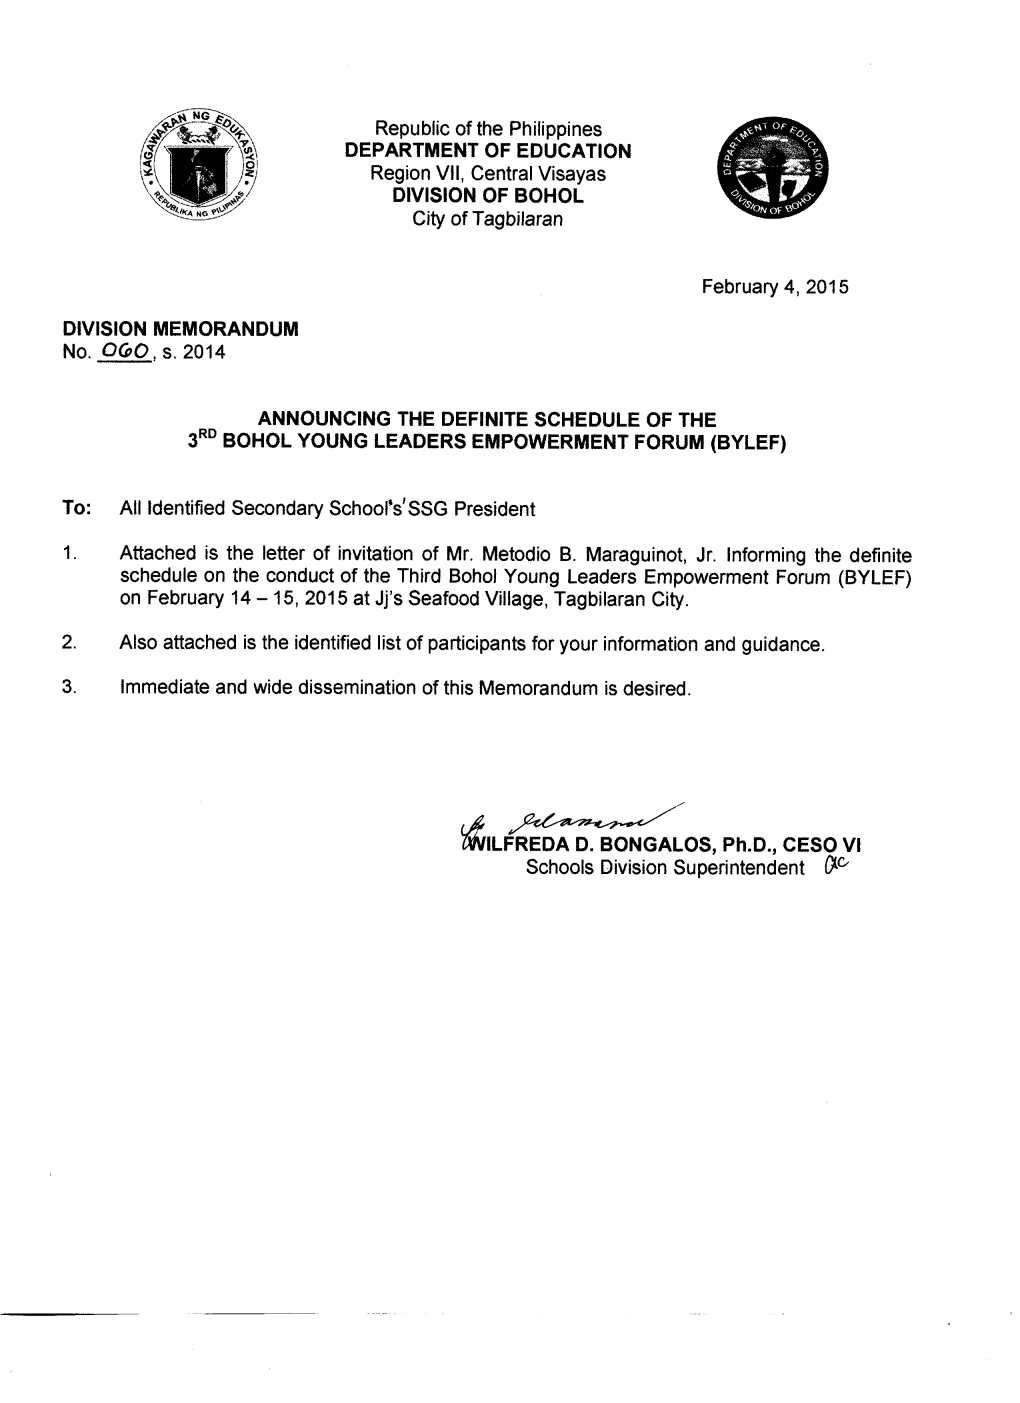 Republic of the Philippines DEPARTMENT of EDUCATION Region VII, Central Visayas DIVISION of BOHOL City of Tagbilaran